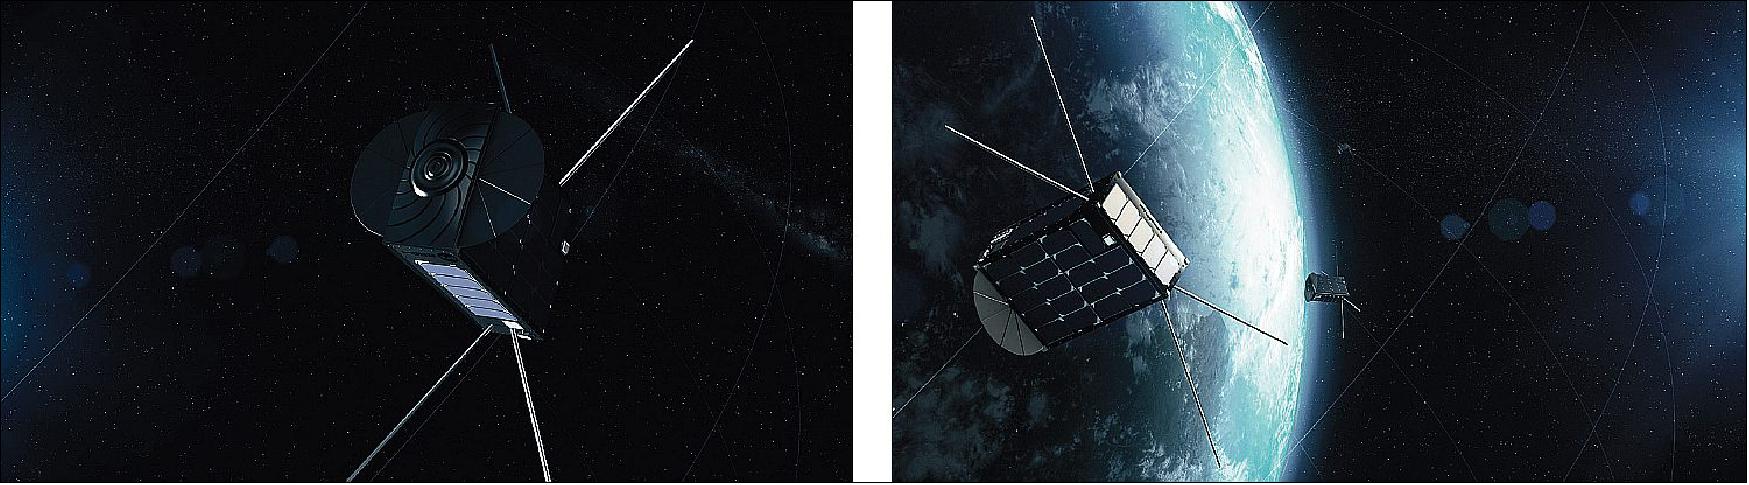 Figure 3: Artist's illustration of the deployed BRO satellites (image credit: Rocket Lab) 9)